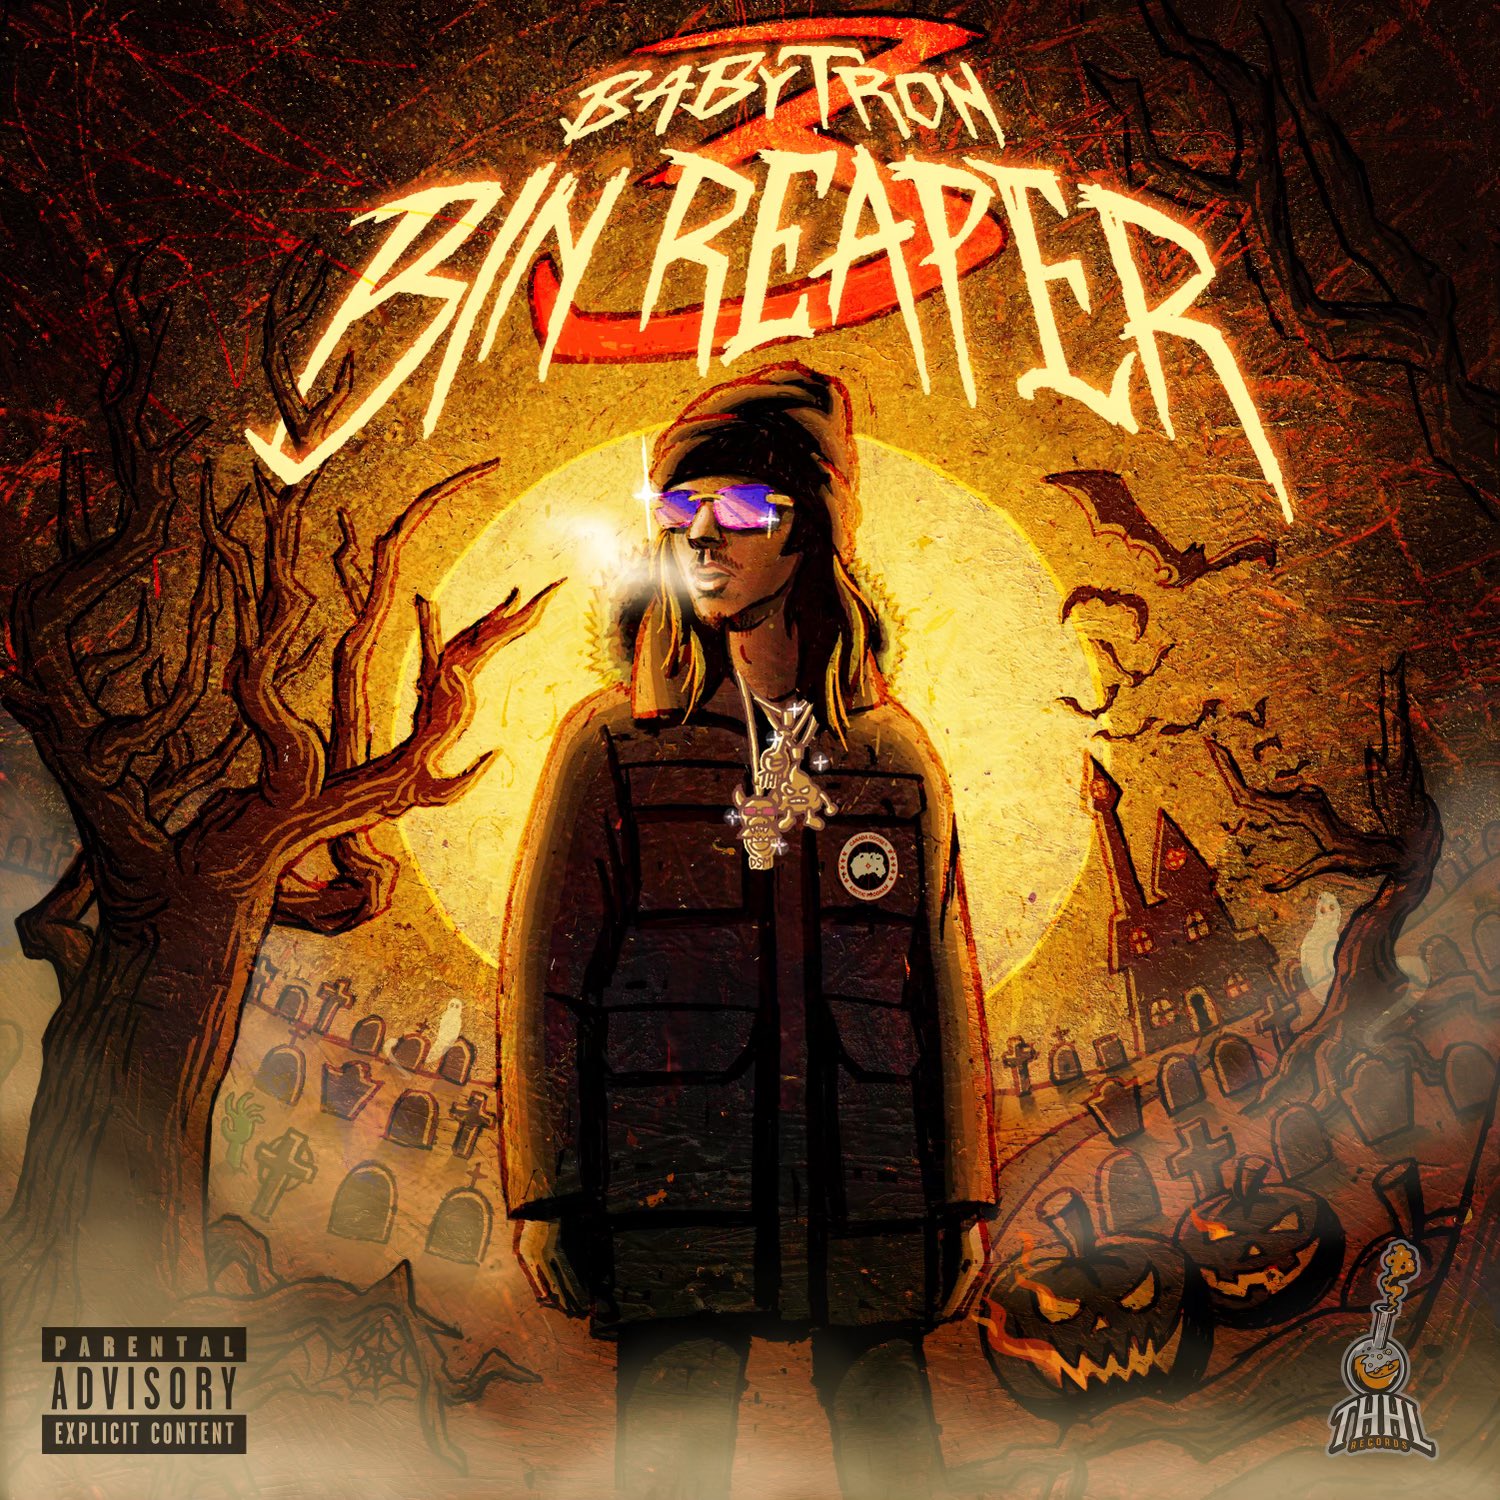 Bin Reaper 3: New Testament by BabyTron (Album, Detroit Trap